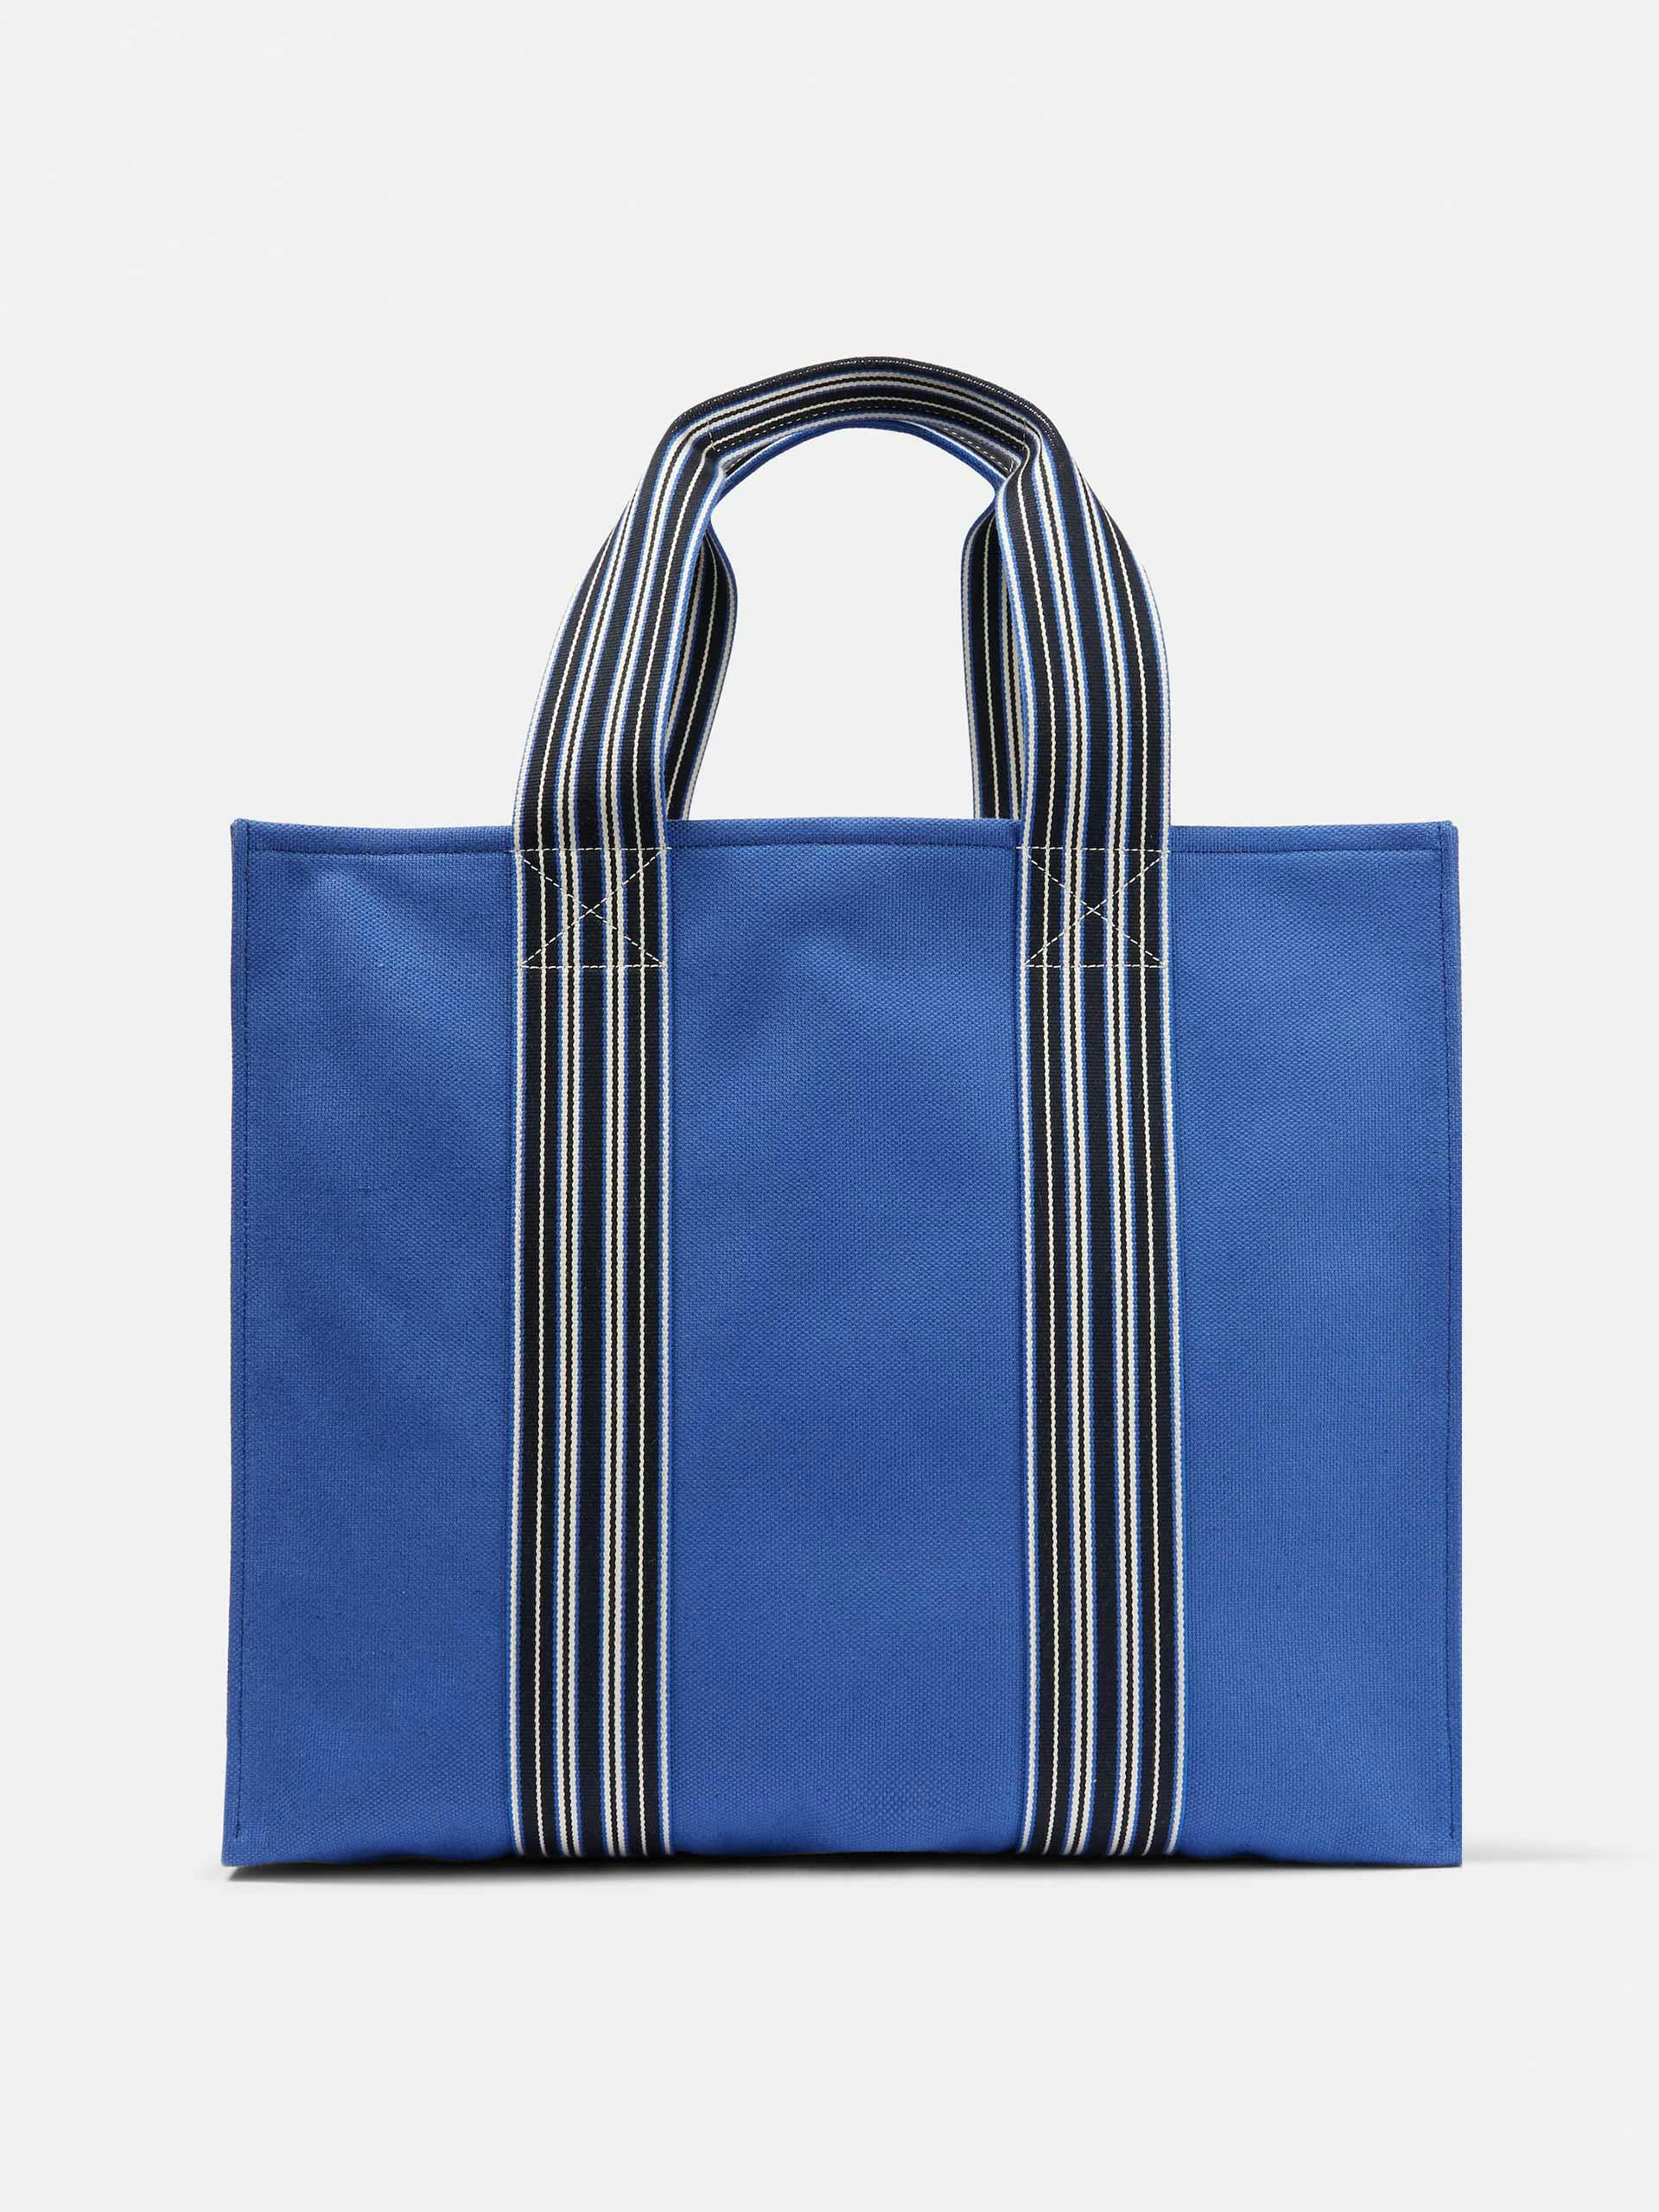 Blue canvas tote bag